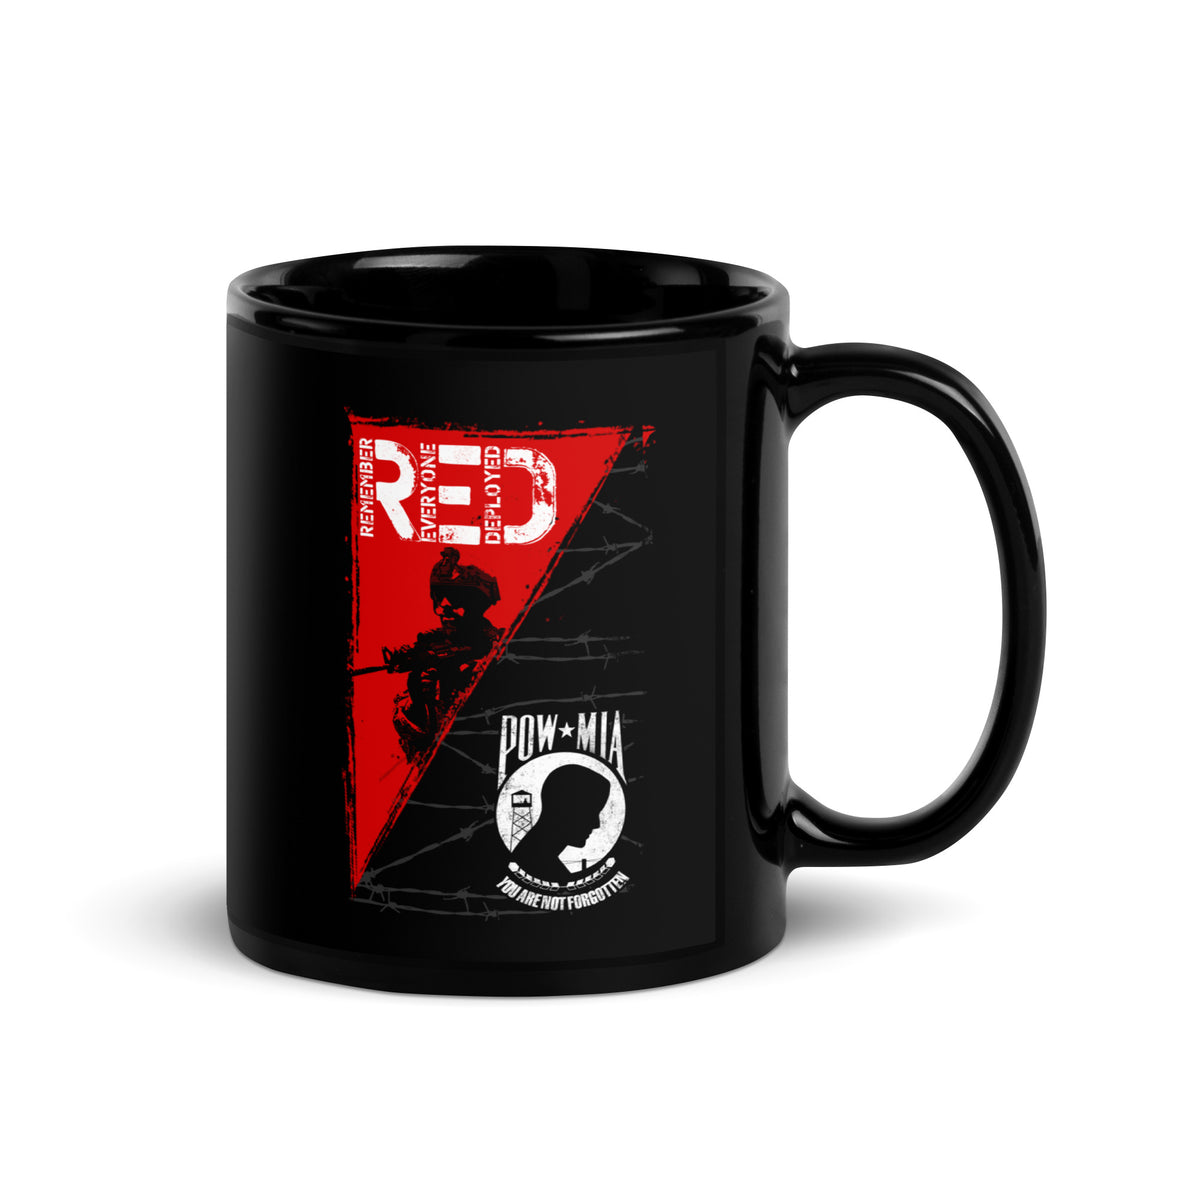 RED/POW/MIA Mug